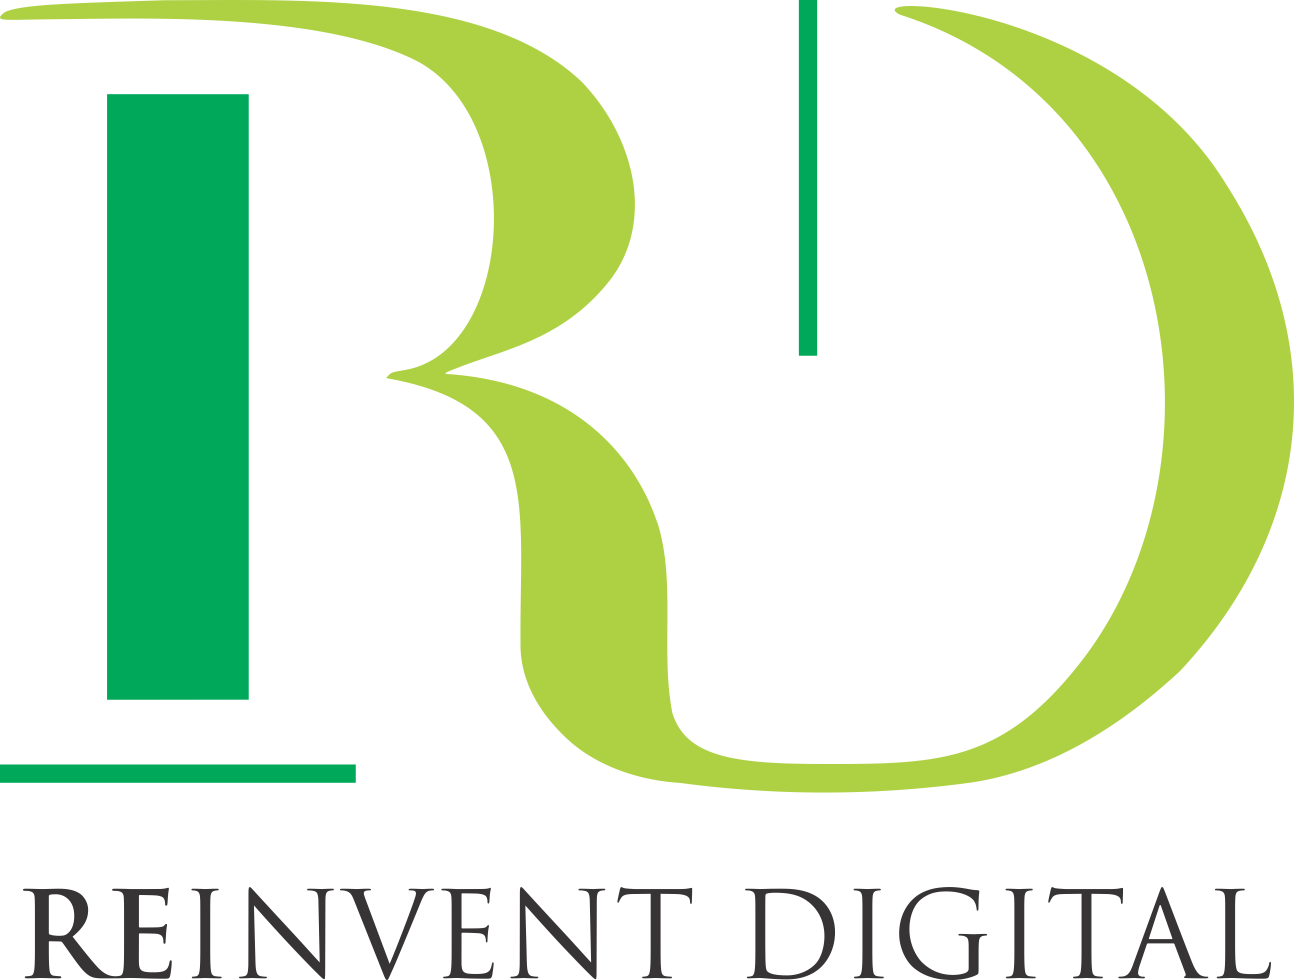 Reinvent Digital Media Pvt. Ltd. profile on Qualified.One